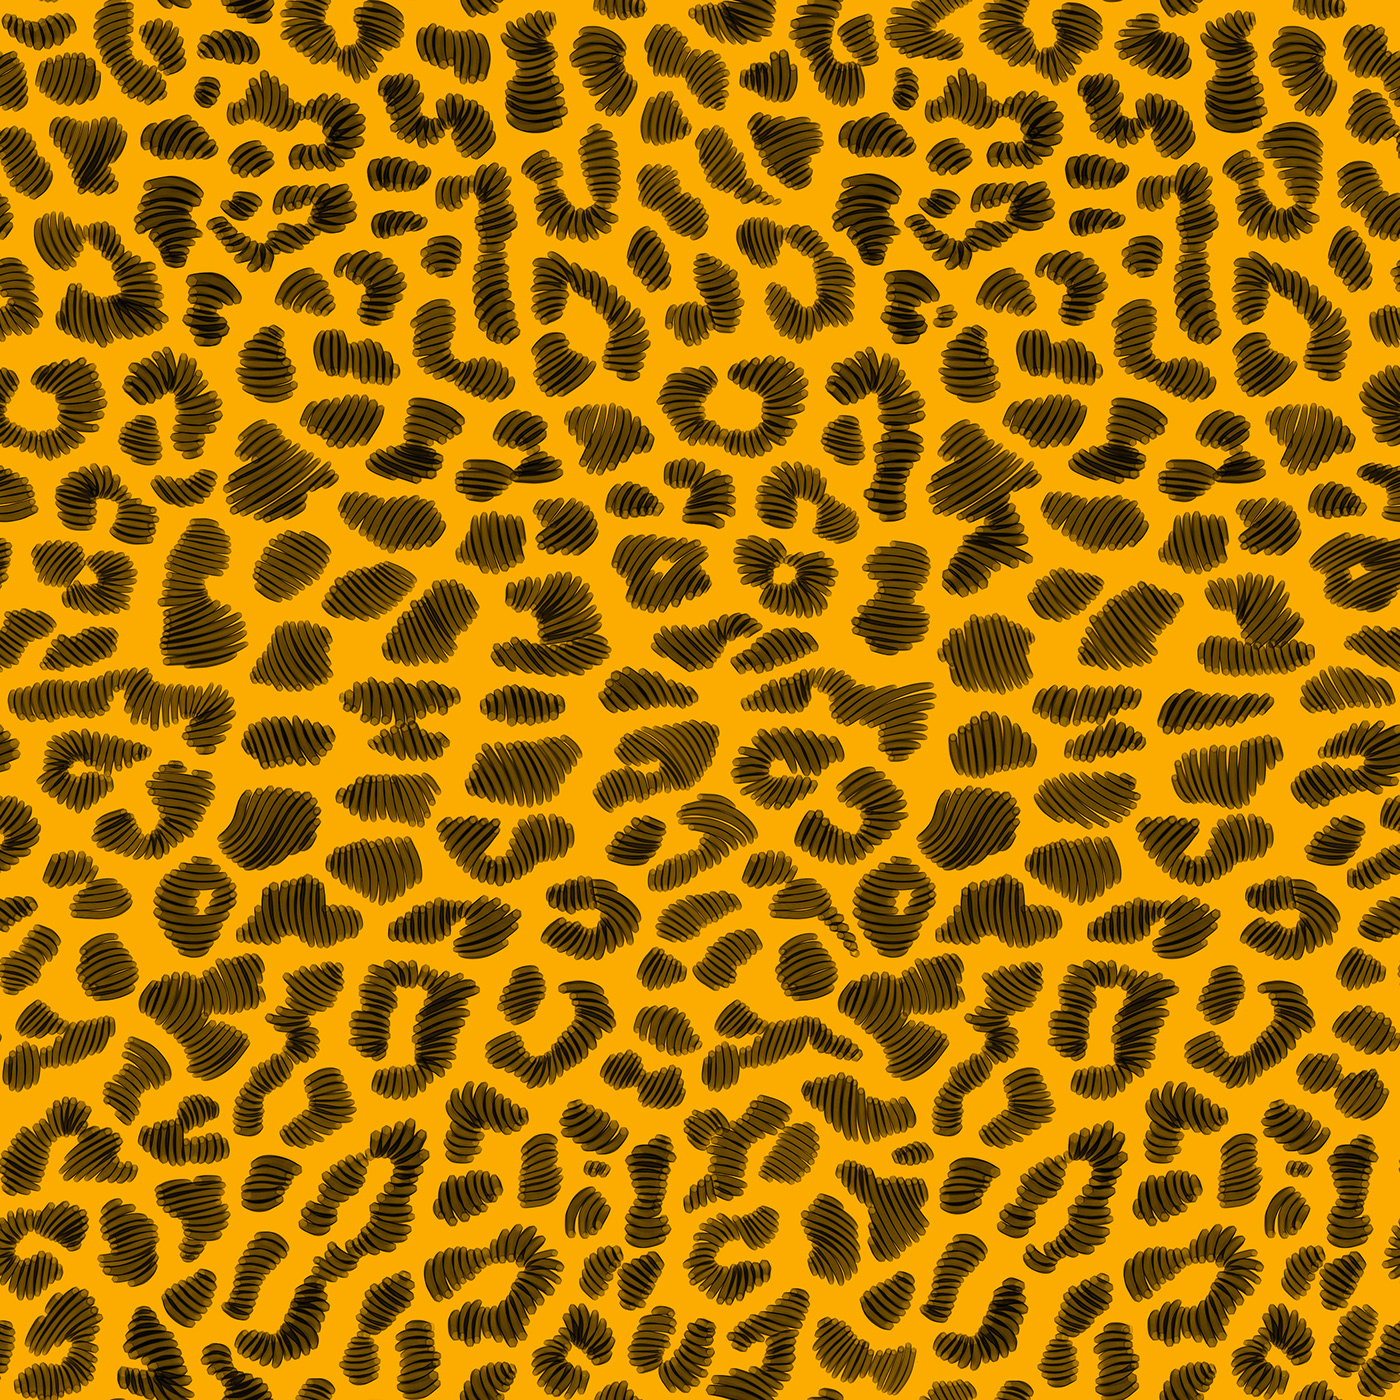 animal leopard cheetah africa animals pattern background seamless wallpaper textile